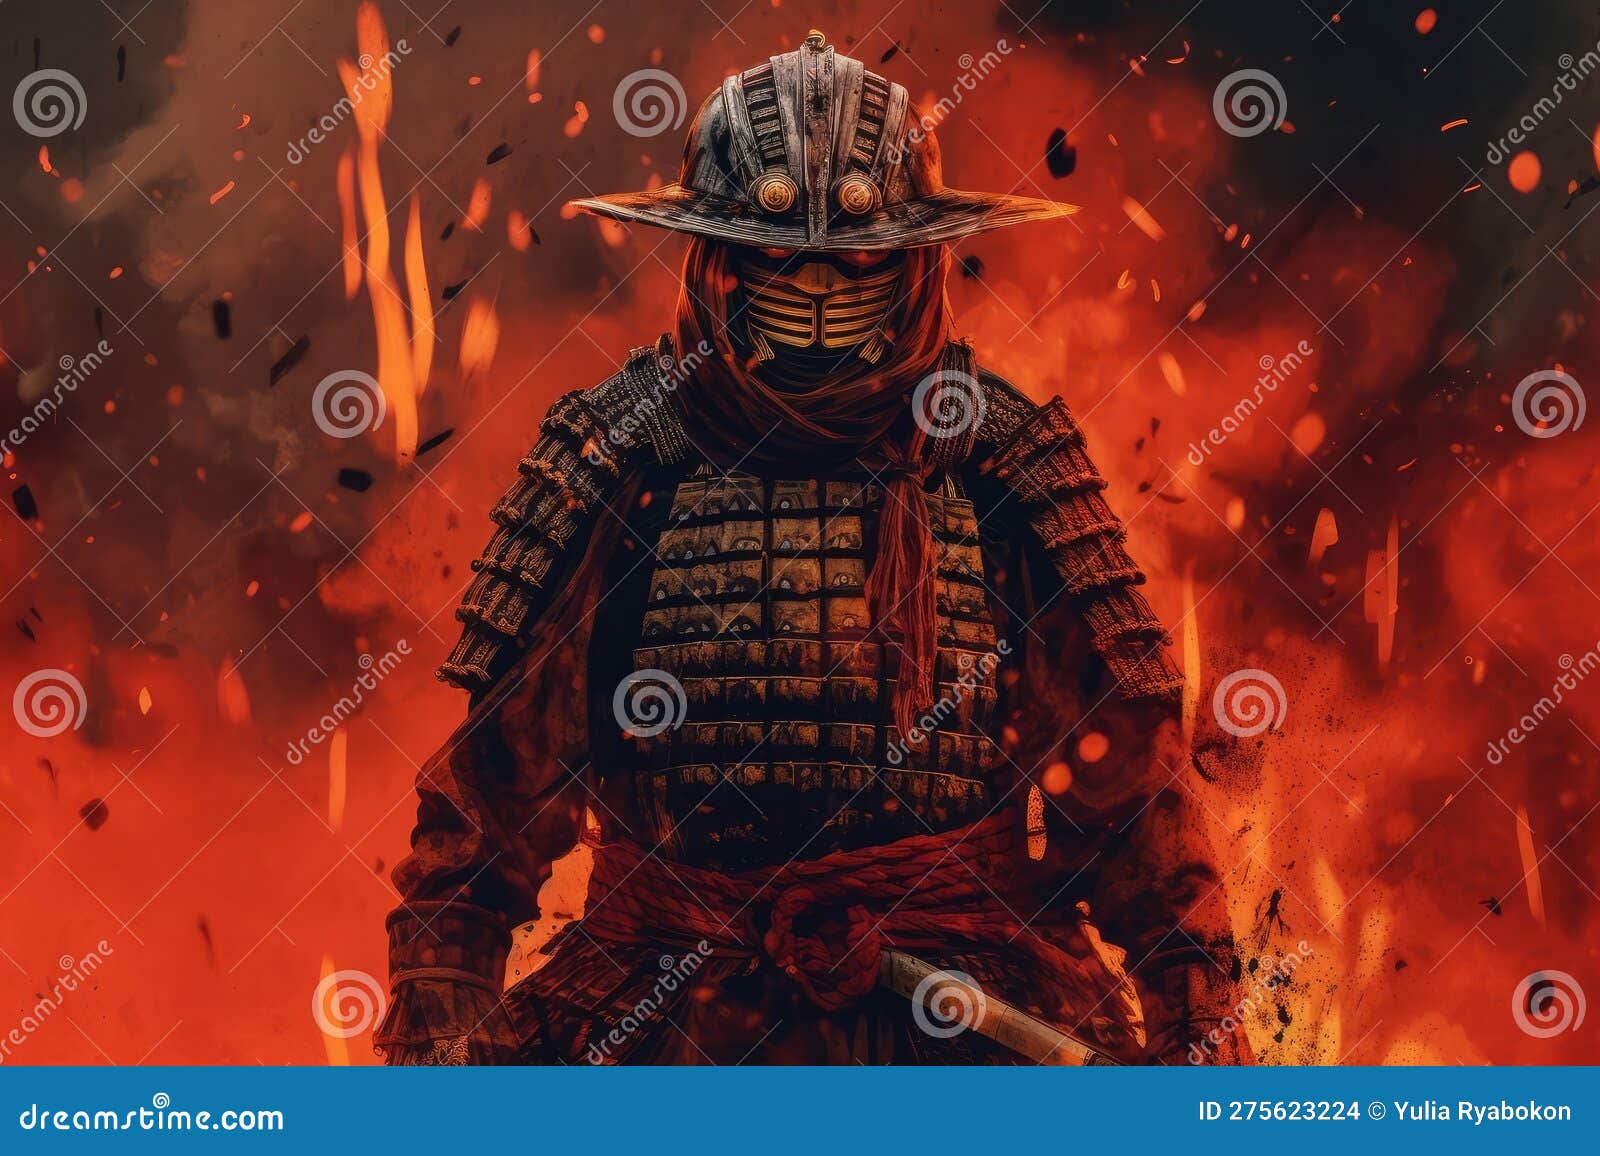 samurai fire digitalart. generate ai